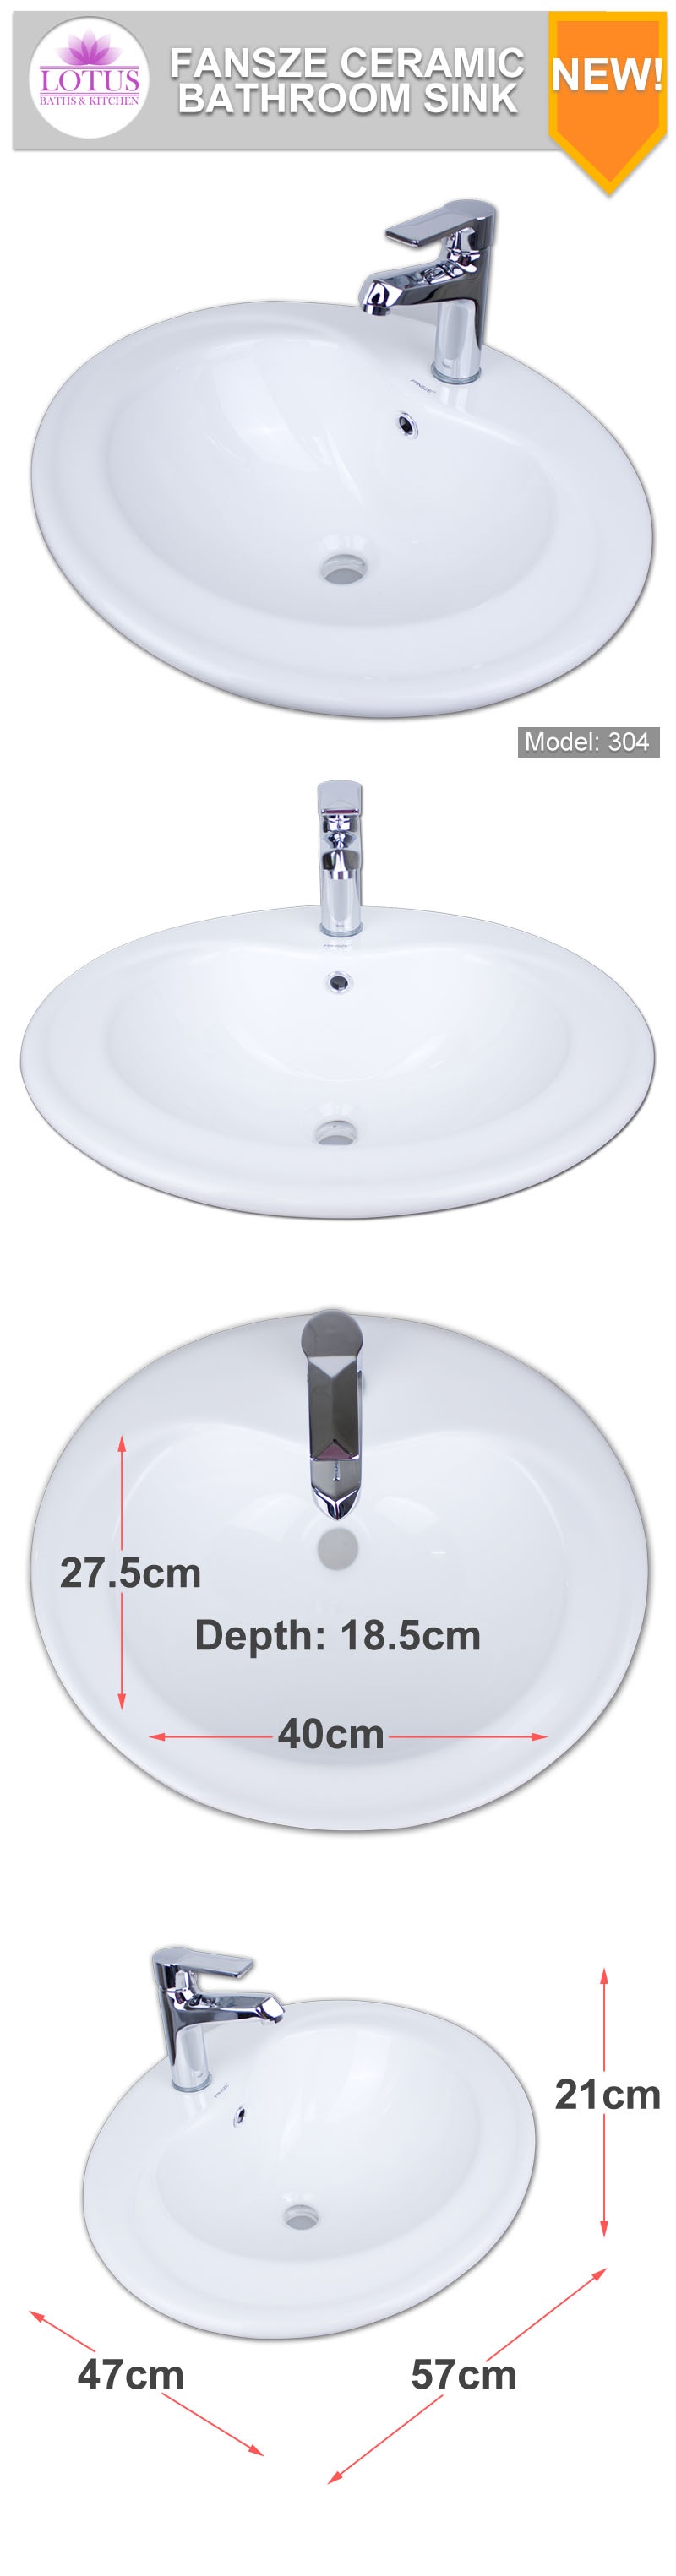 Lotus 304 Fansze Round Ceramic Bathroom Sink White Lazada Ph